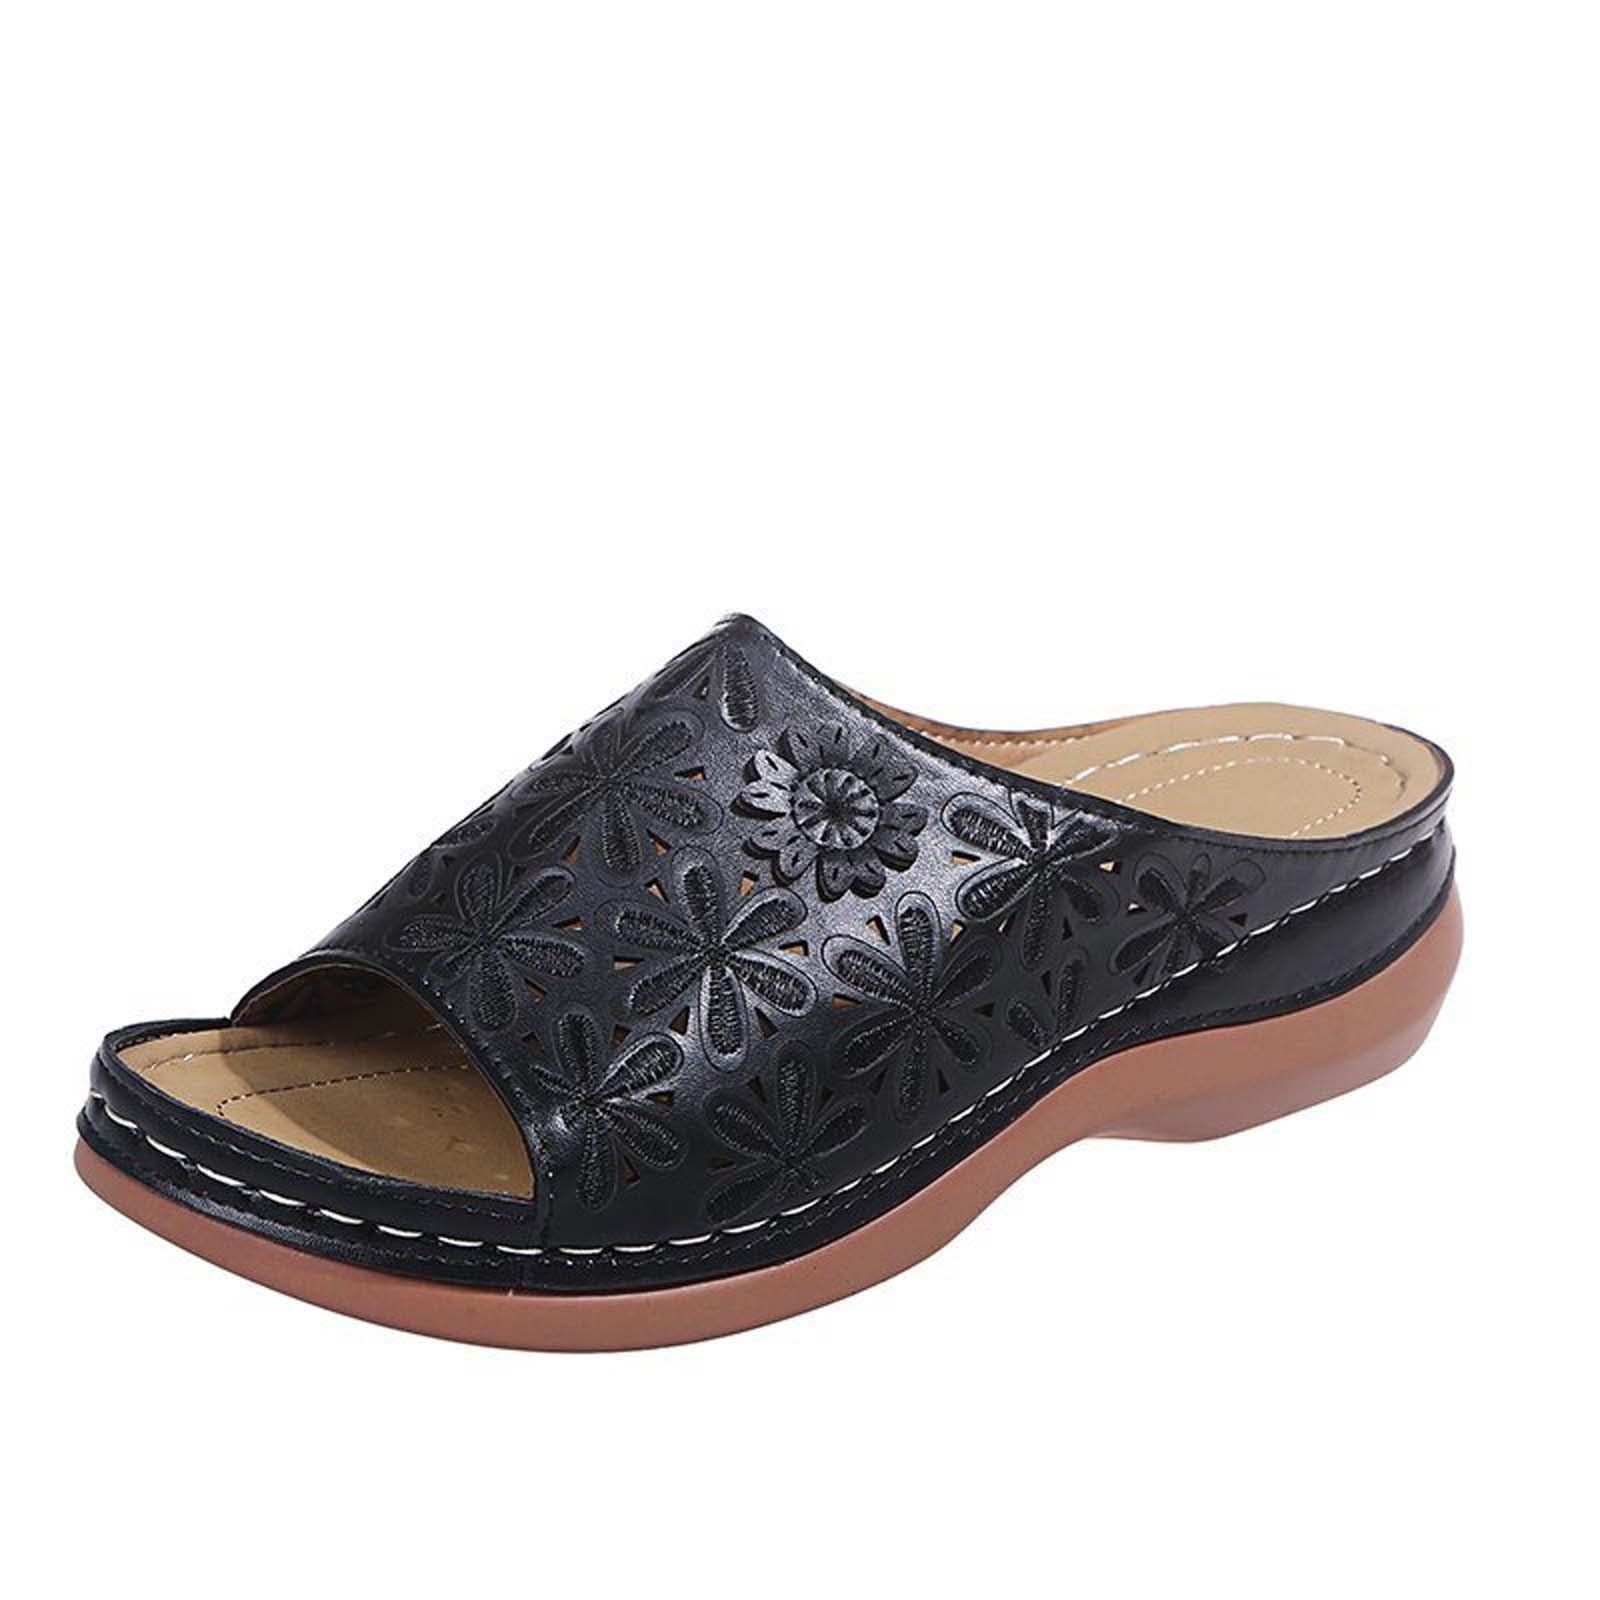 Daily wear Glb Ladies PU Sandal, Size: 6 Uk at Rs 165/pair in Jaipur | ID:  23078390091